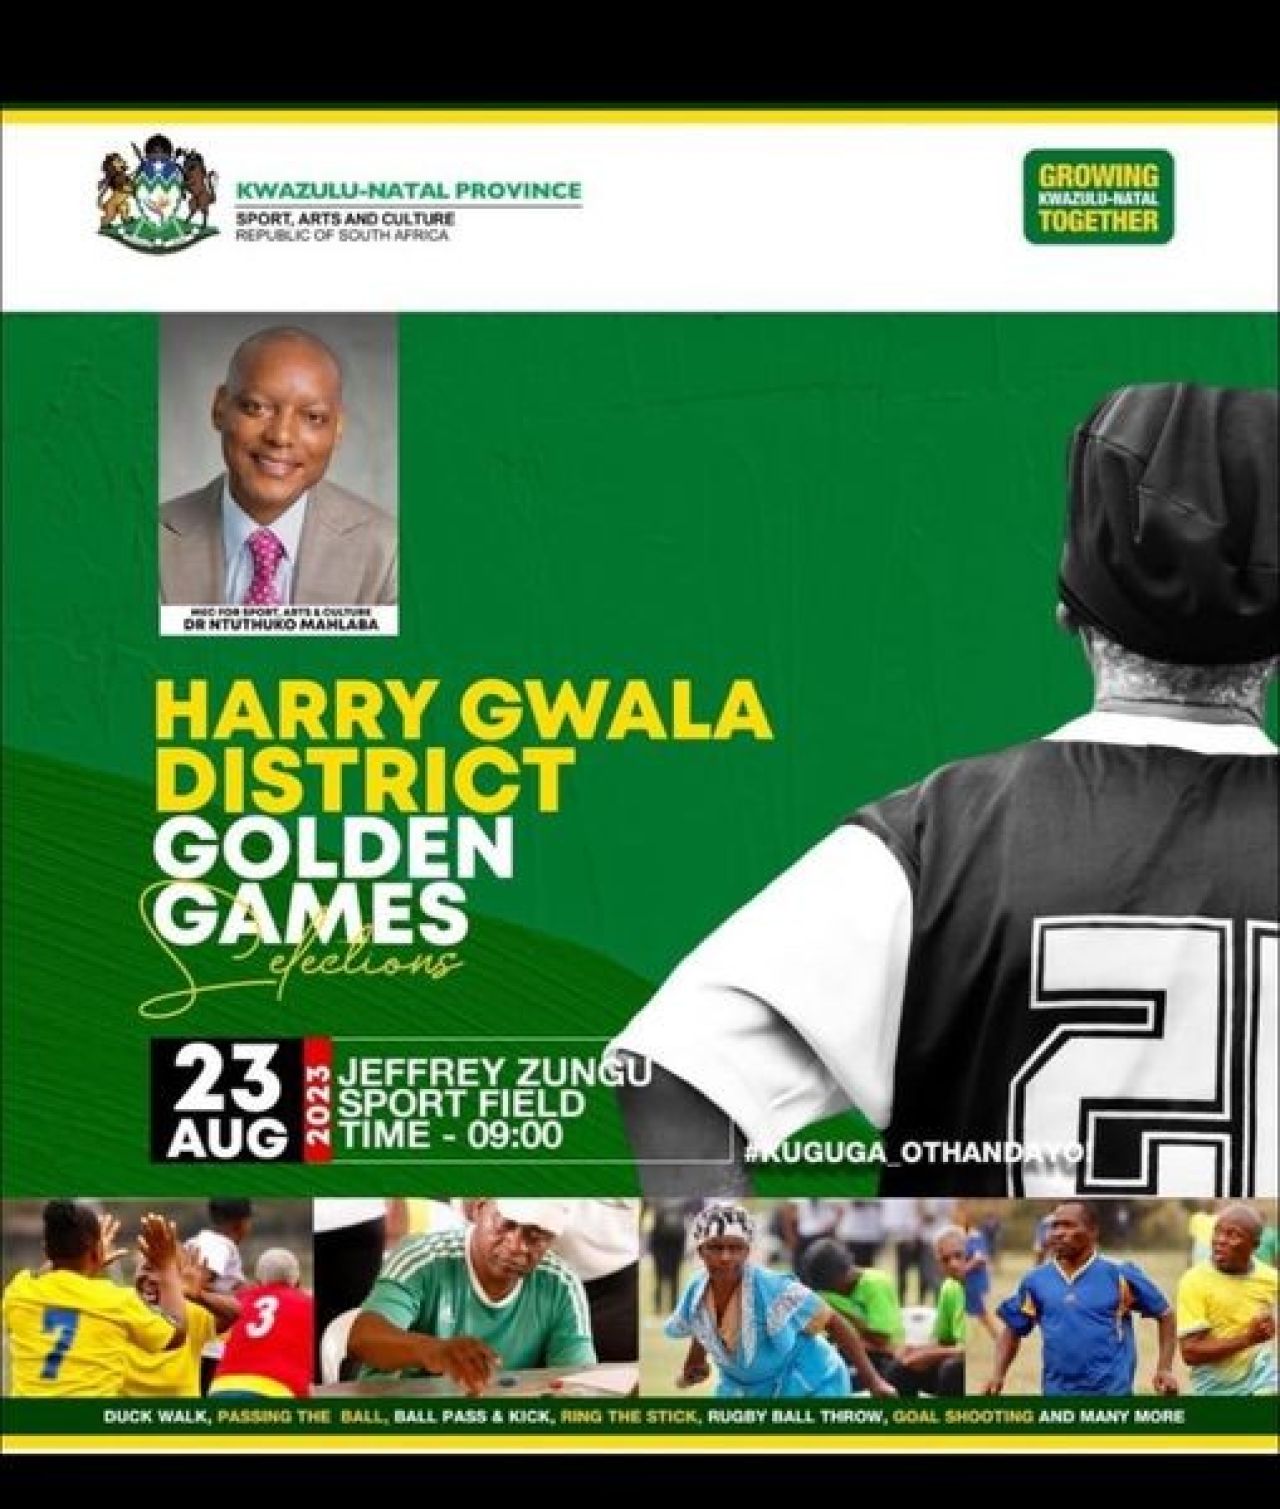 Harry Gwala District Golden Games